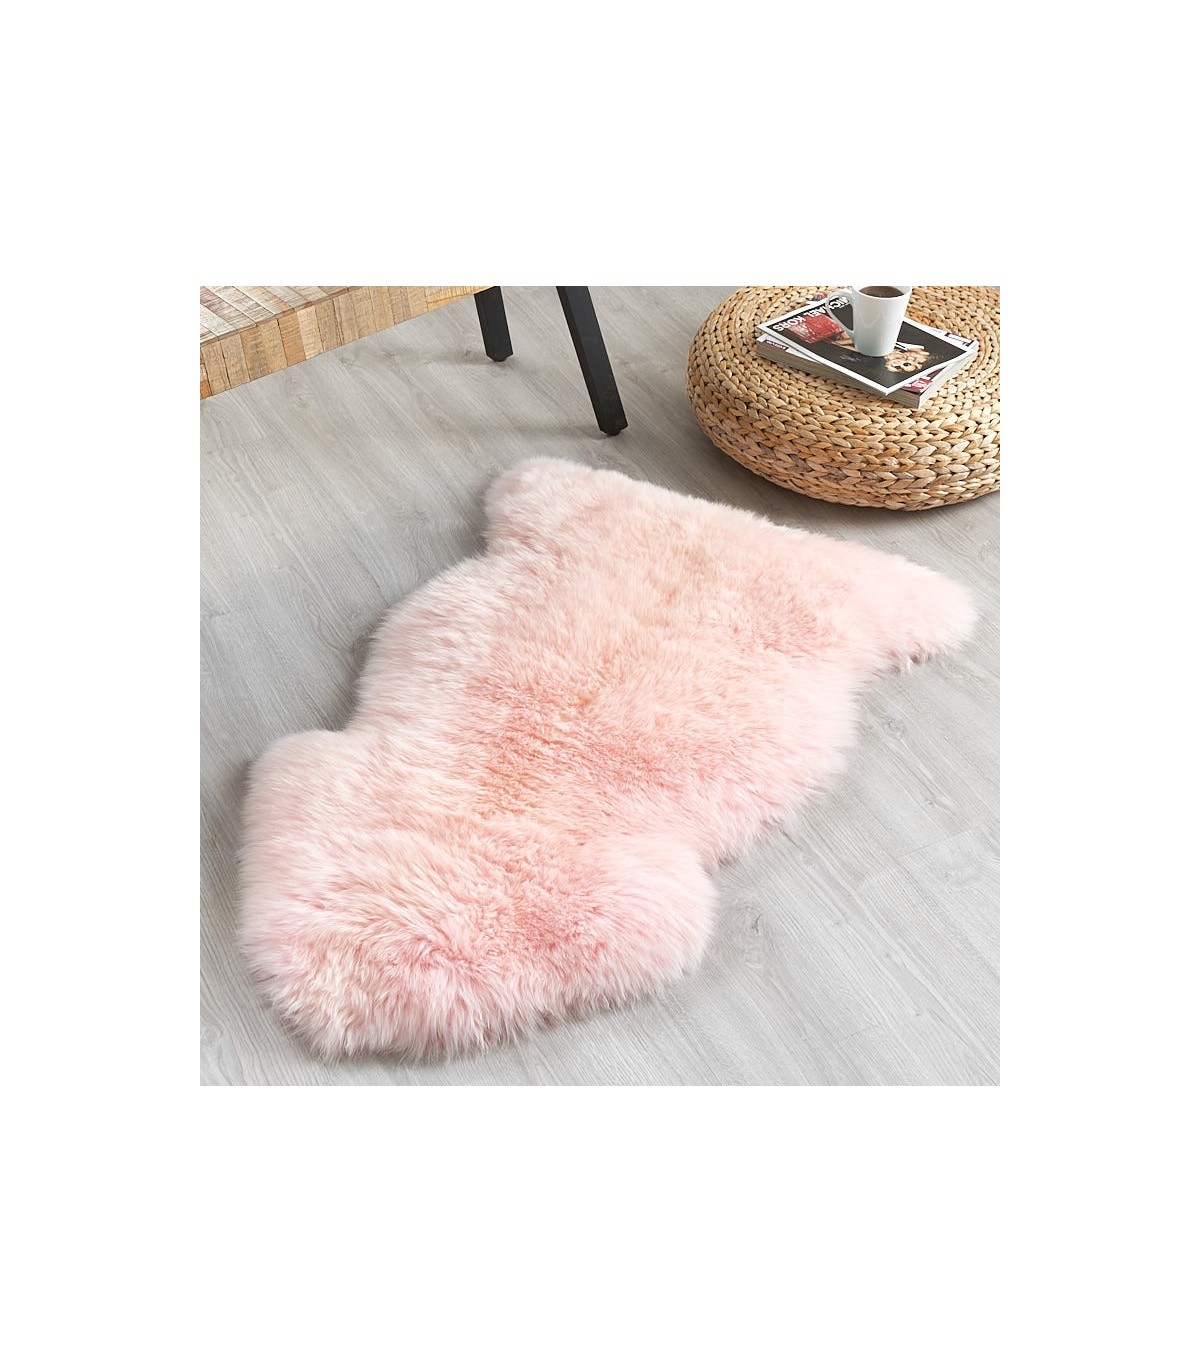 Candy Floss Pink Sheepskin Rug 2x3 5, Pale Pink Fur Rug